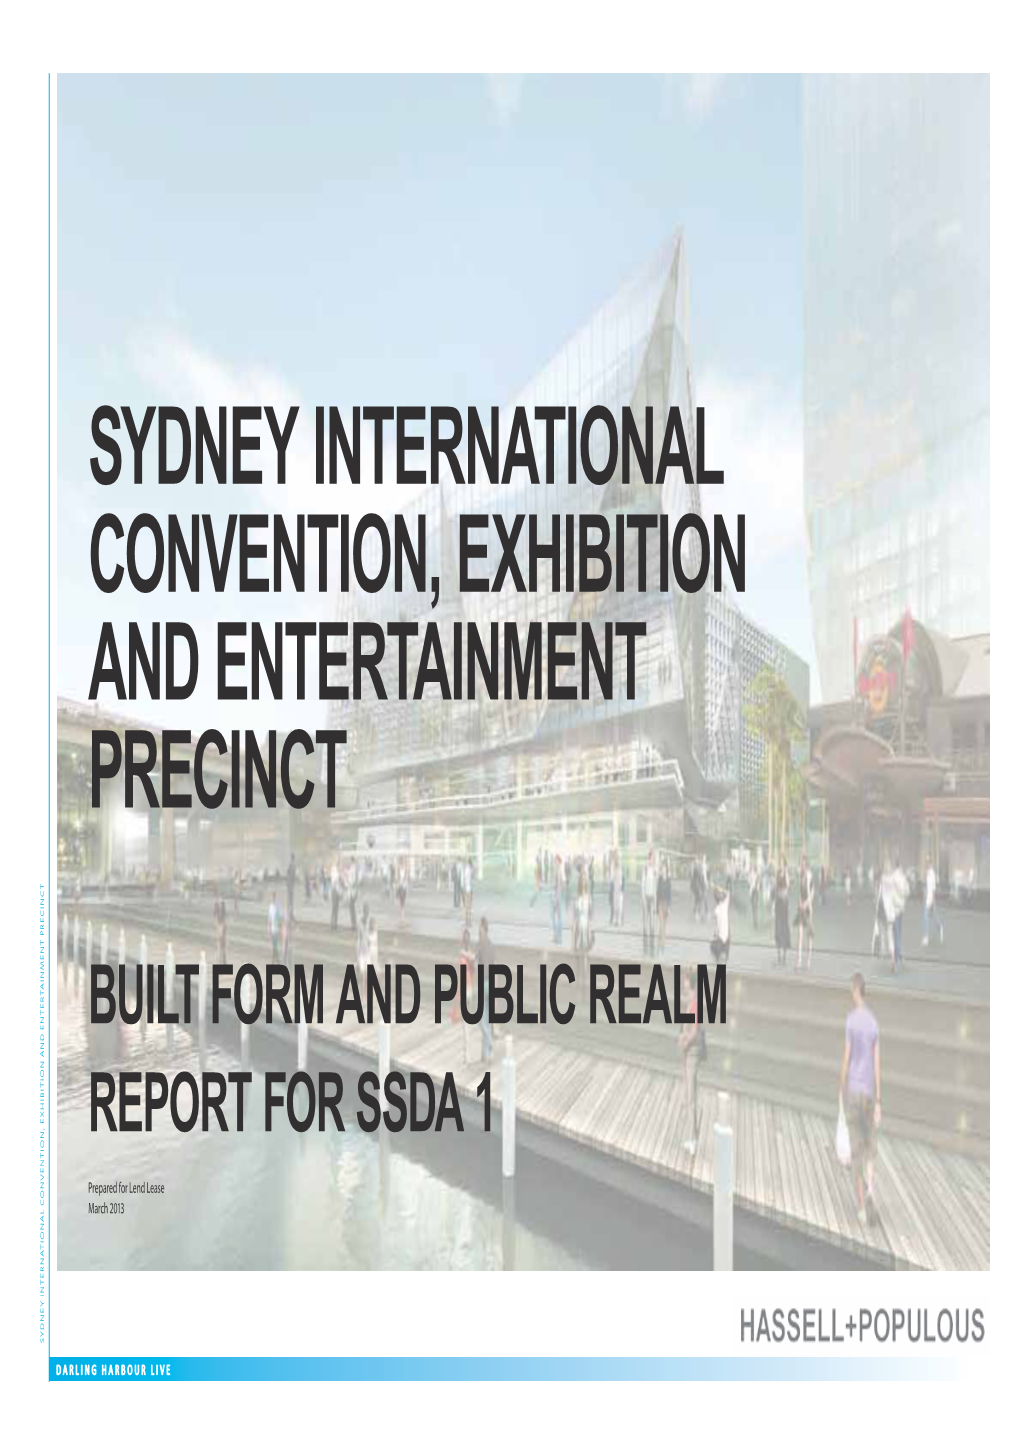 Sydney International Convention, Exhibition and Entertainment Precinct